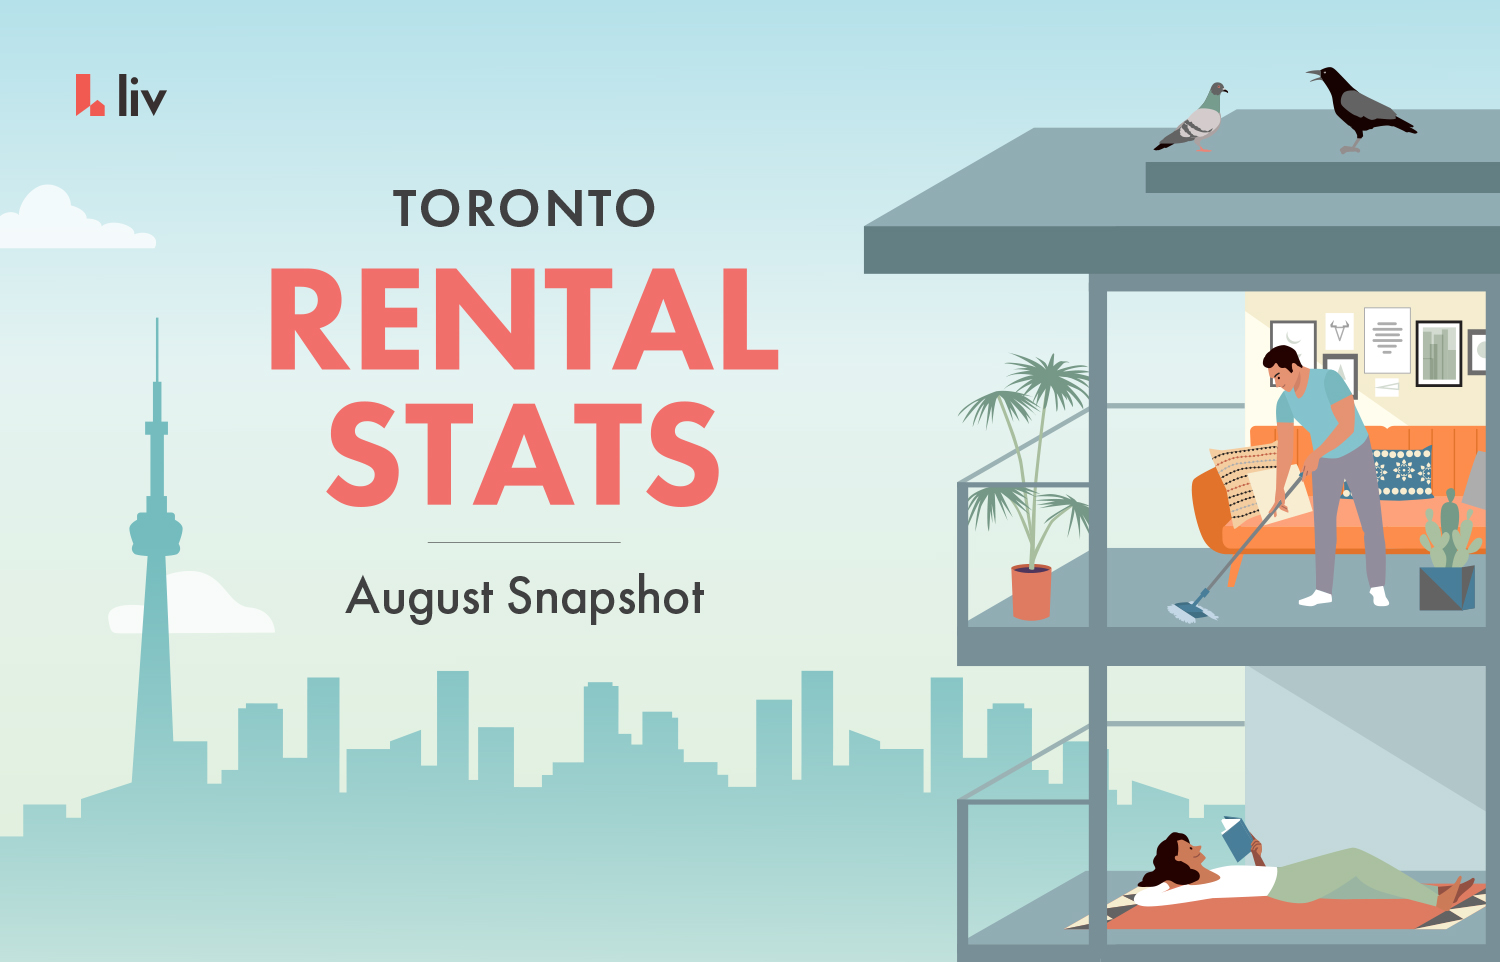 Toronto Rental Stats – August 2019 Snapshot